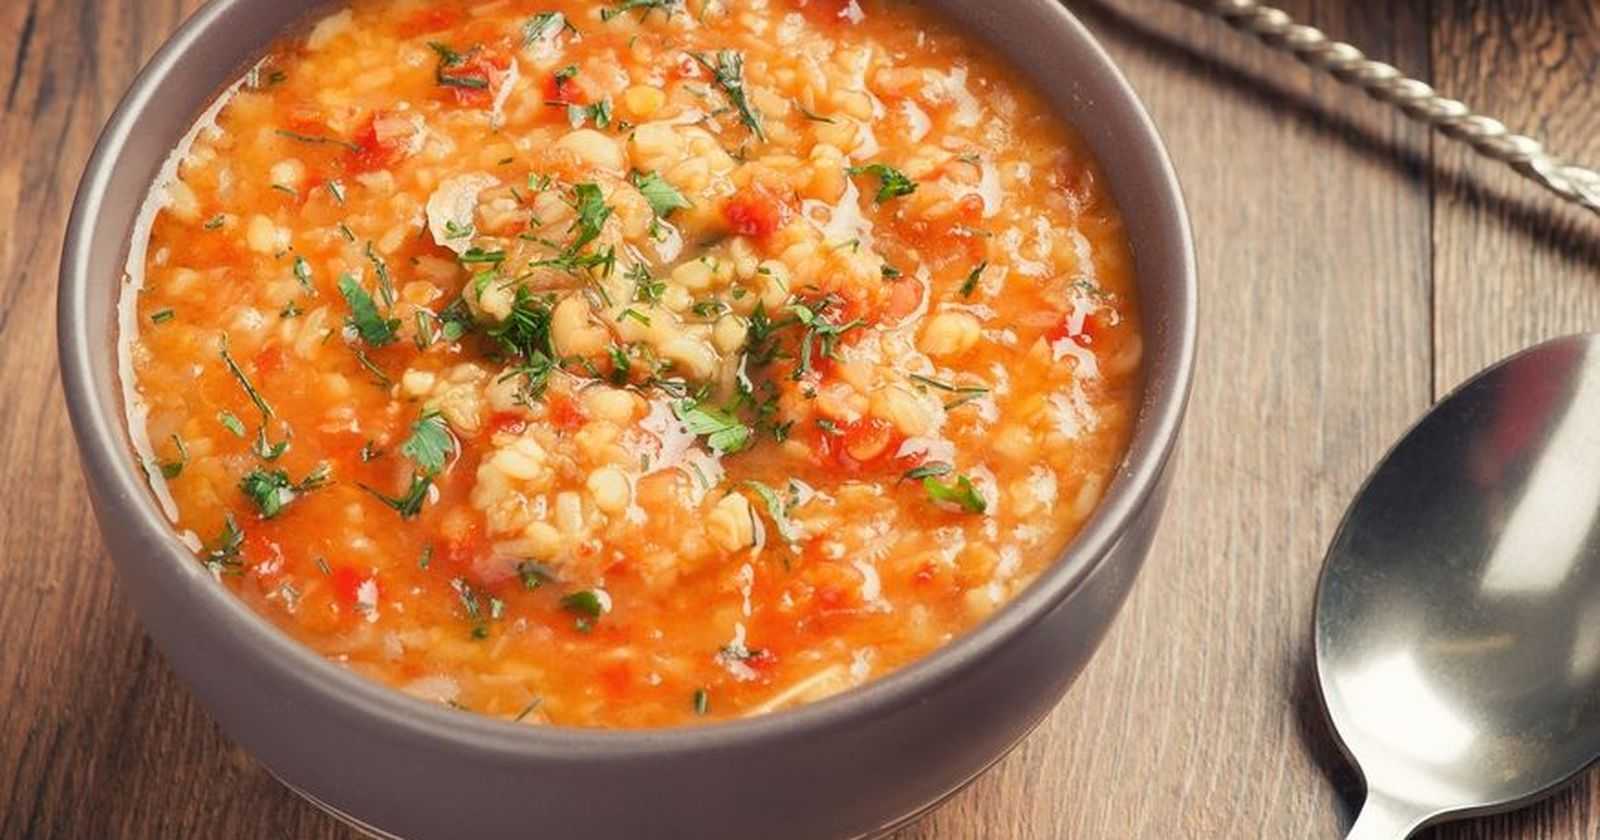 Суп с чечевицей и картофелем: рецепт